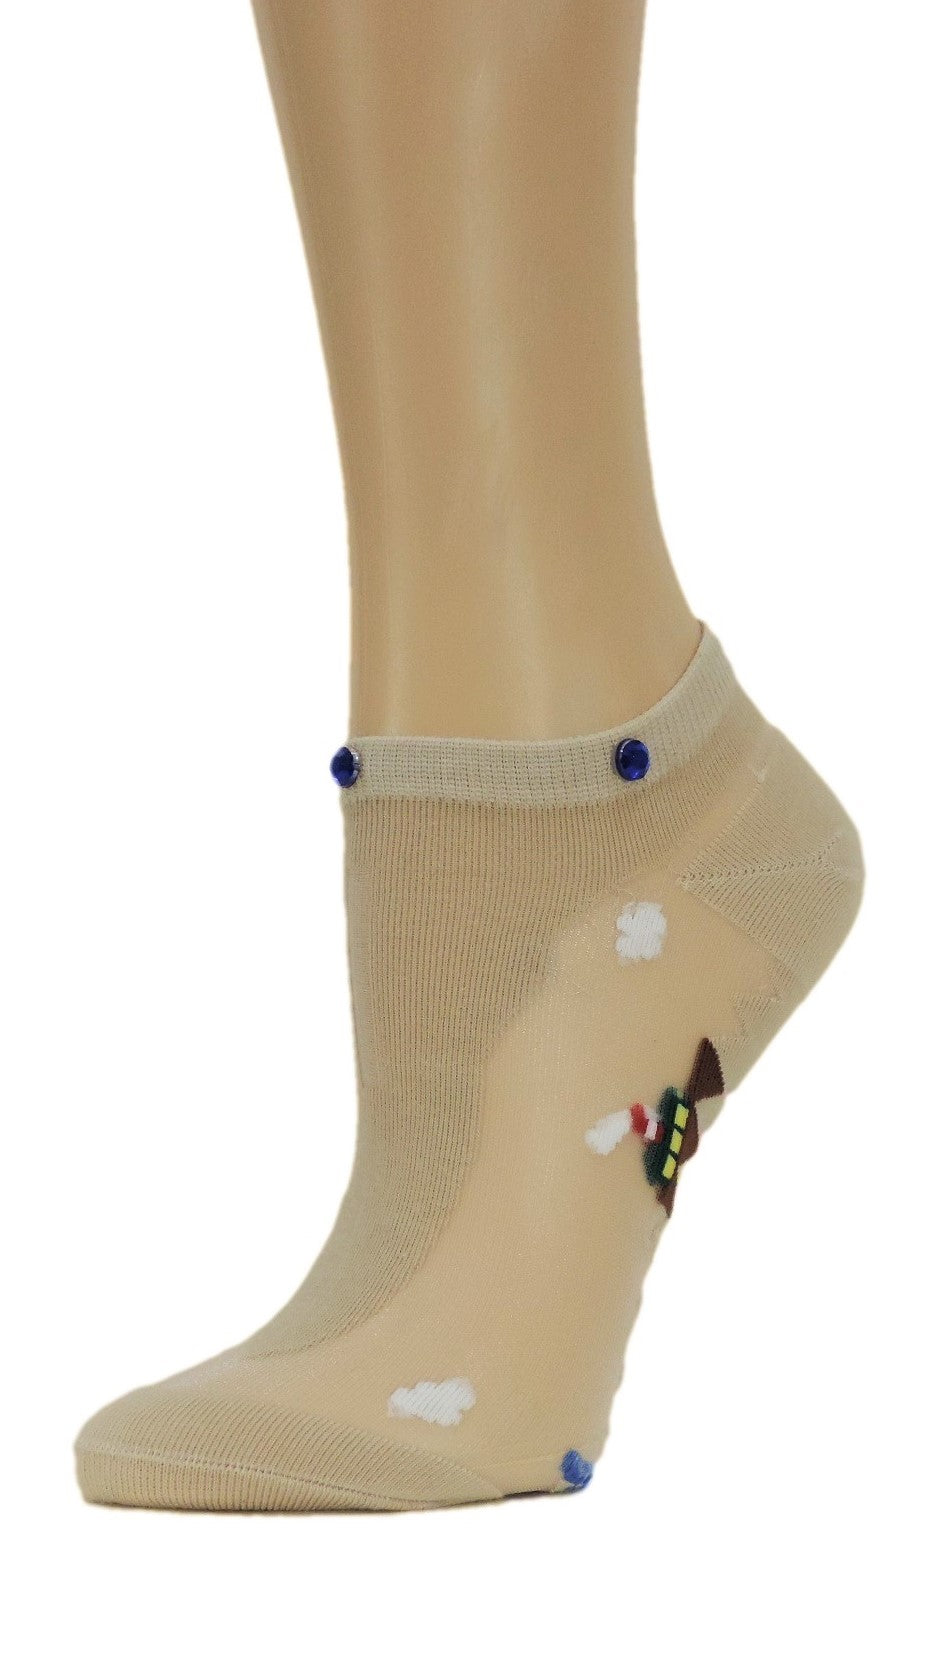 Pretty Custom Ankle Sheer Socks with beads - Global Trendz Fashion®